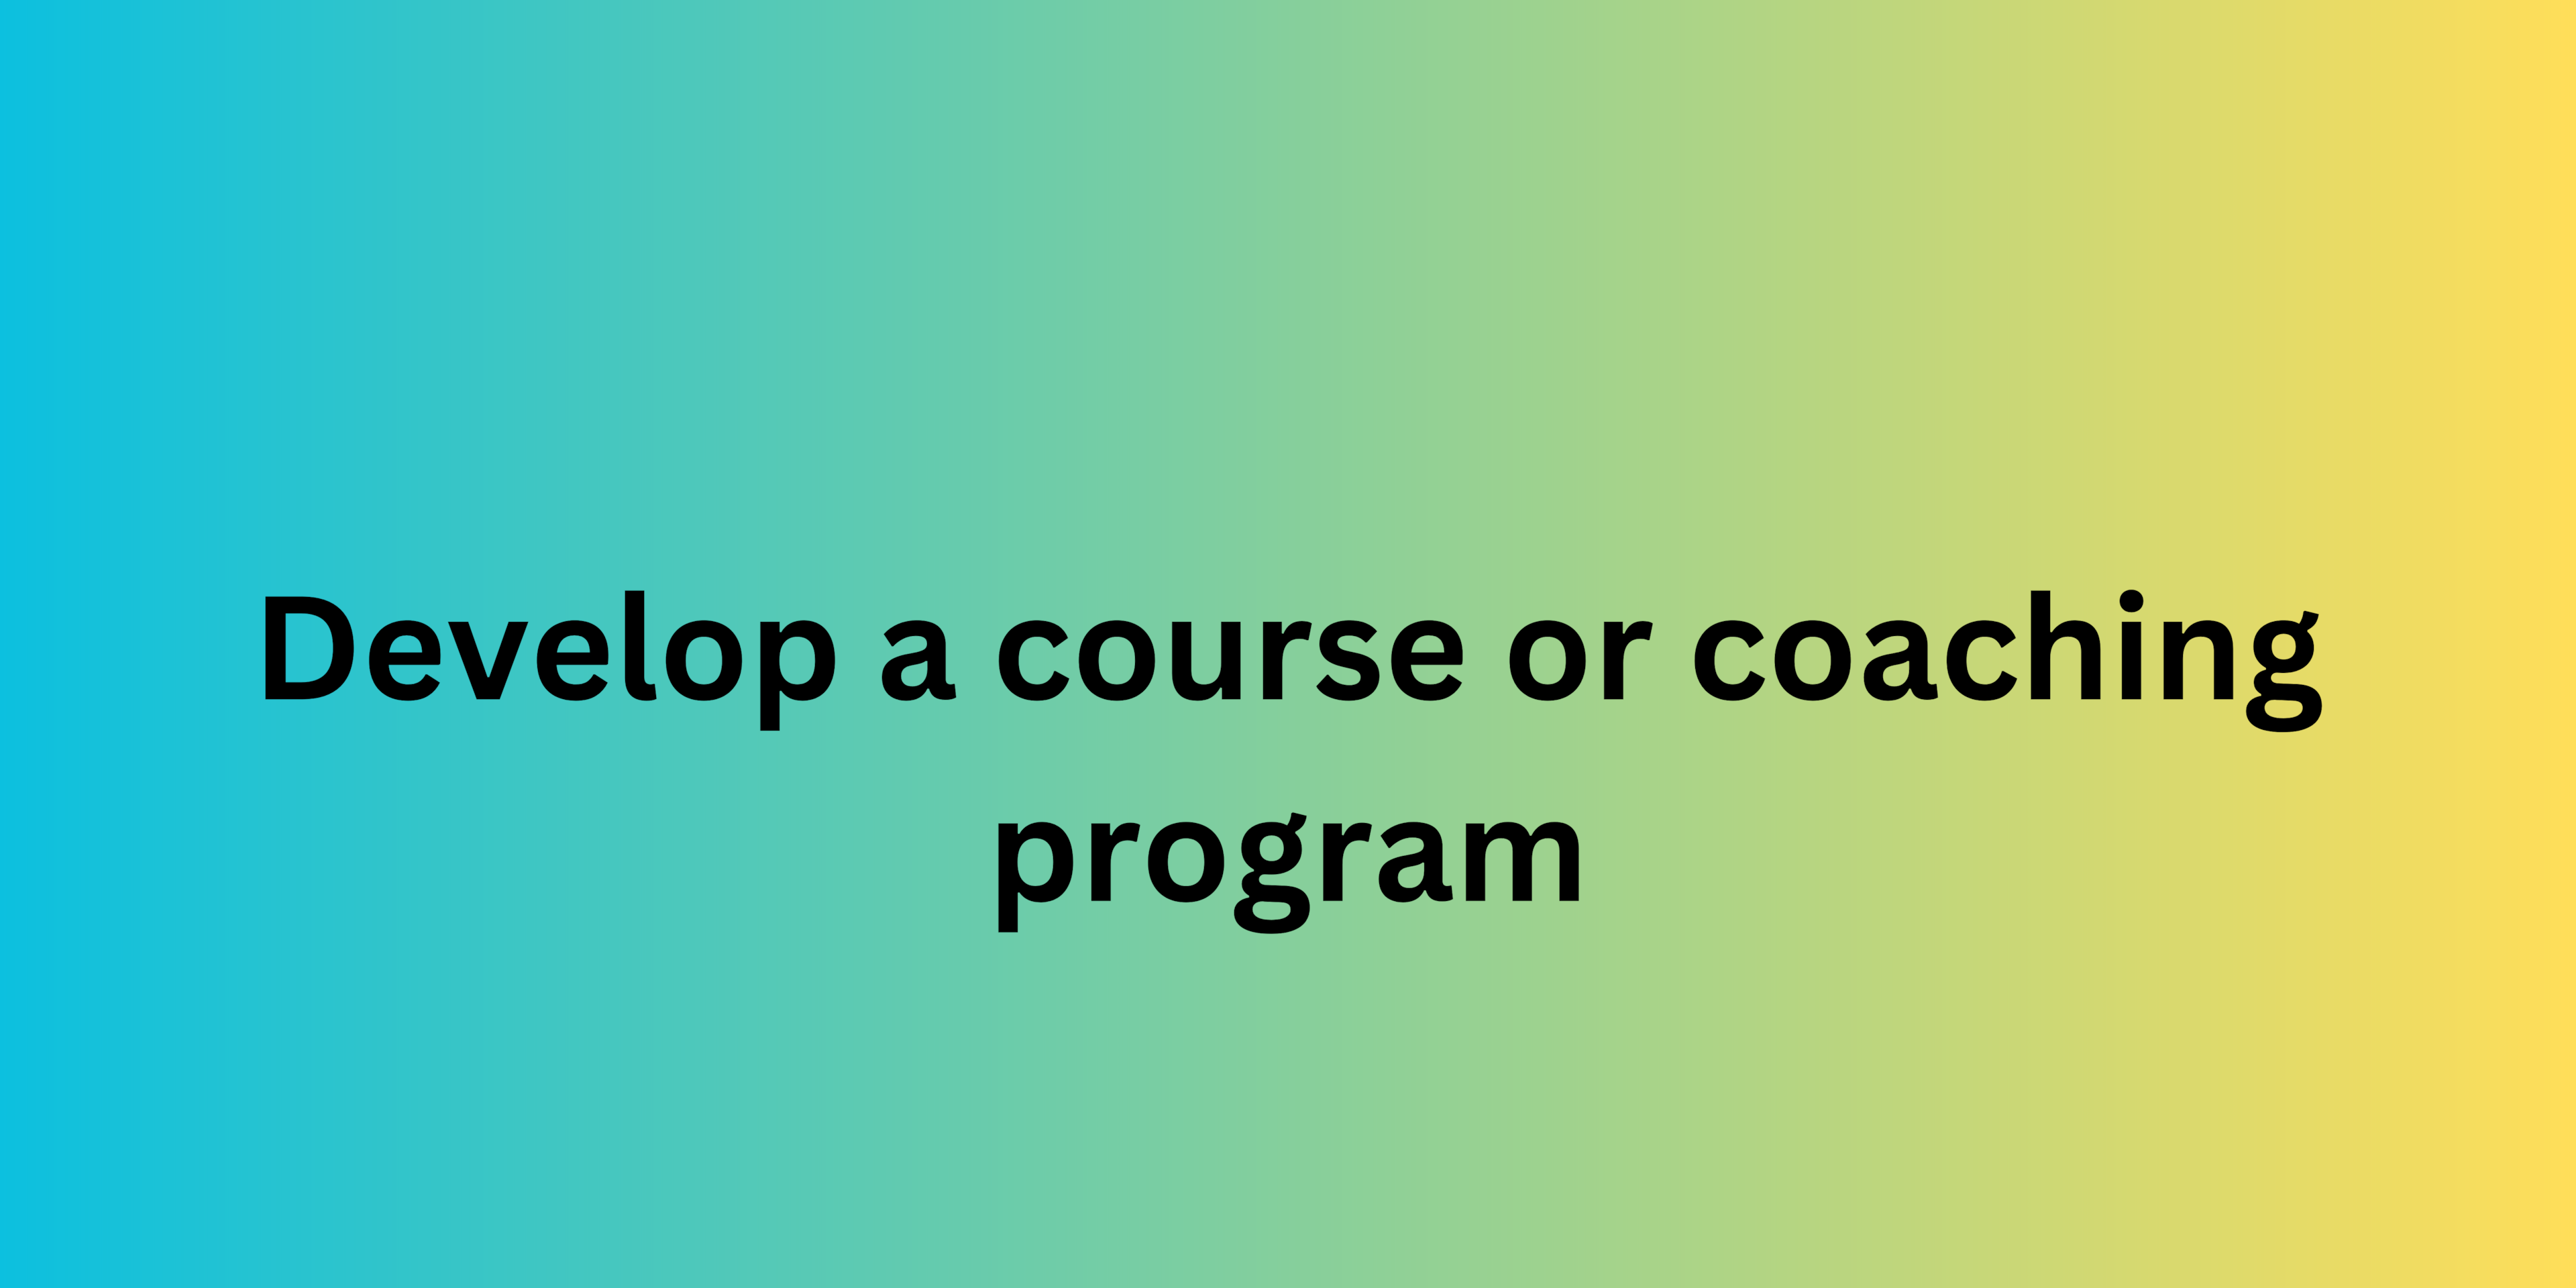 Develop a course or coaching program: